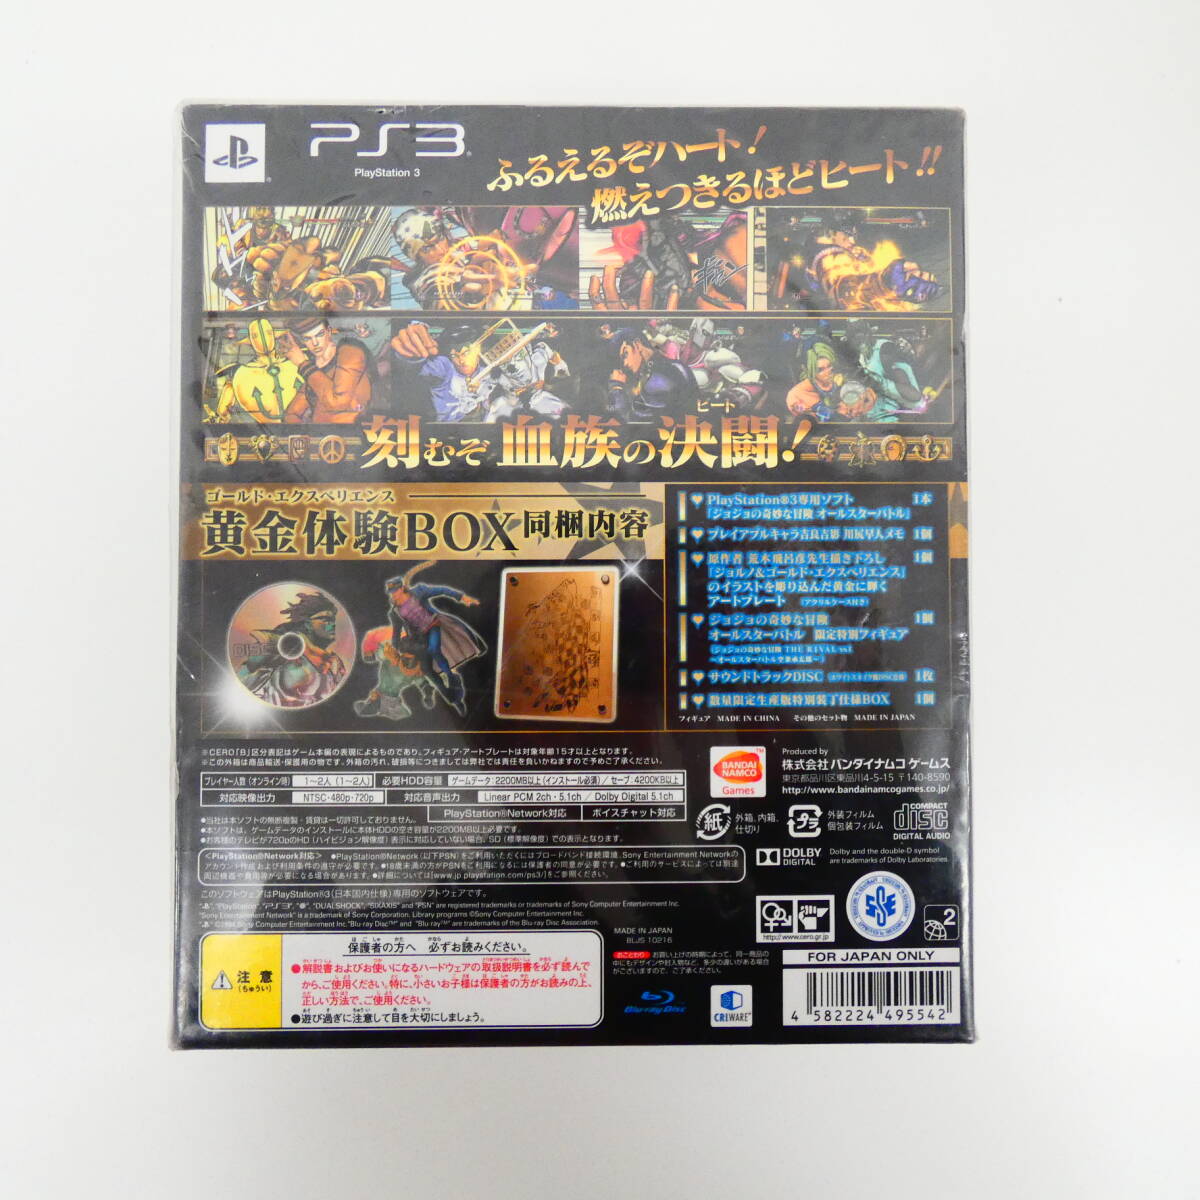 P03100/ JoJo's Bizarre Adventure all Star Battle yellow gold body .( Gold *ek spec liens)BOX PS3 ( Bandai Namco game s)